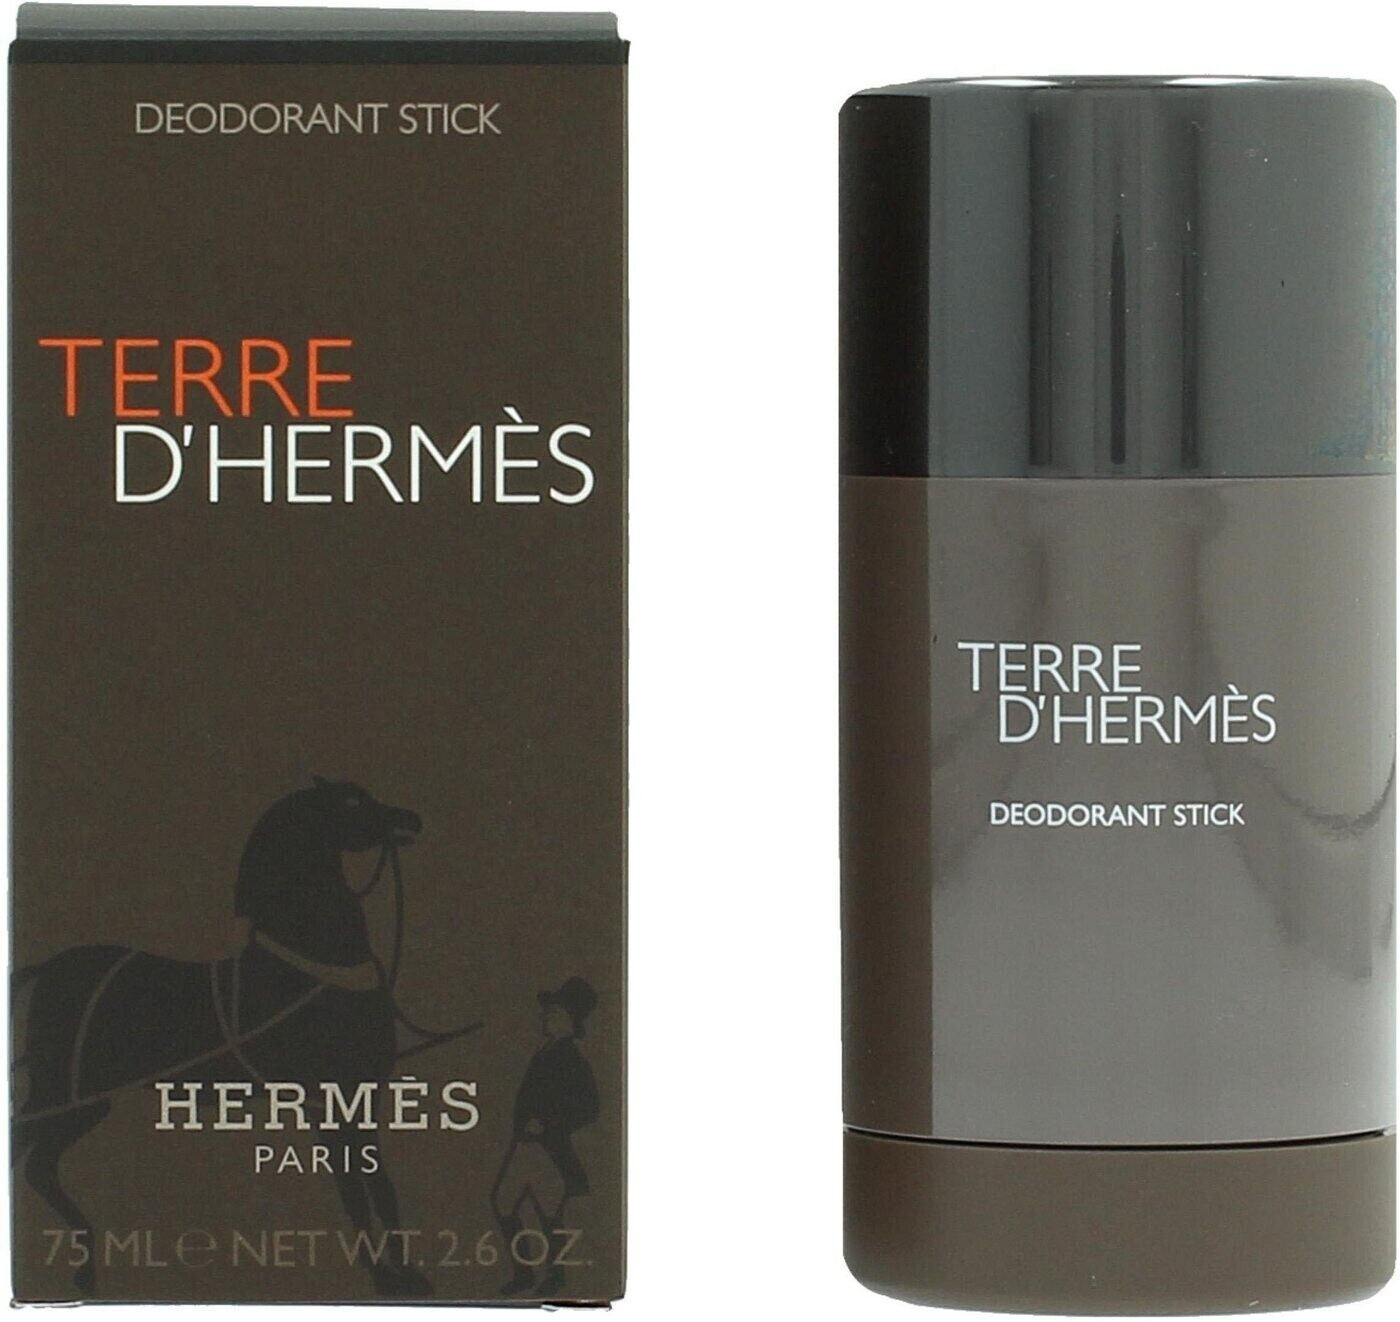 Buy Hermès Terre d'Hermes Deodorant Stick (75 from £25.92 (Today) – Best Deals on